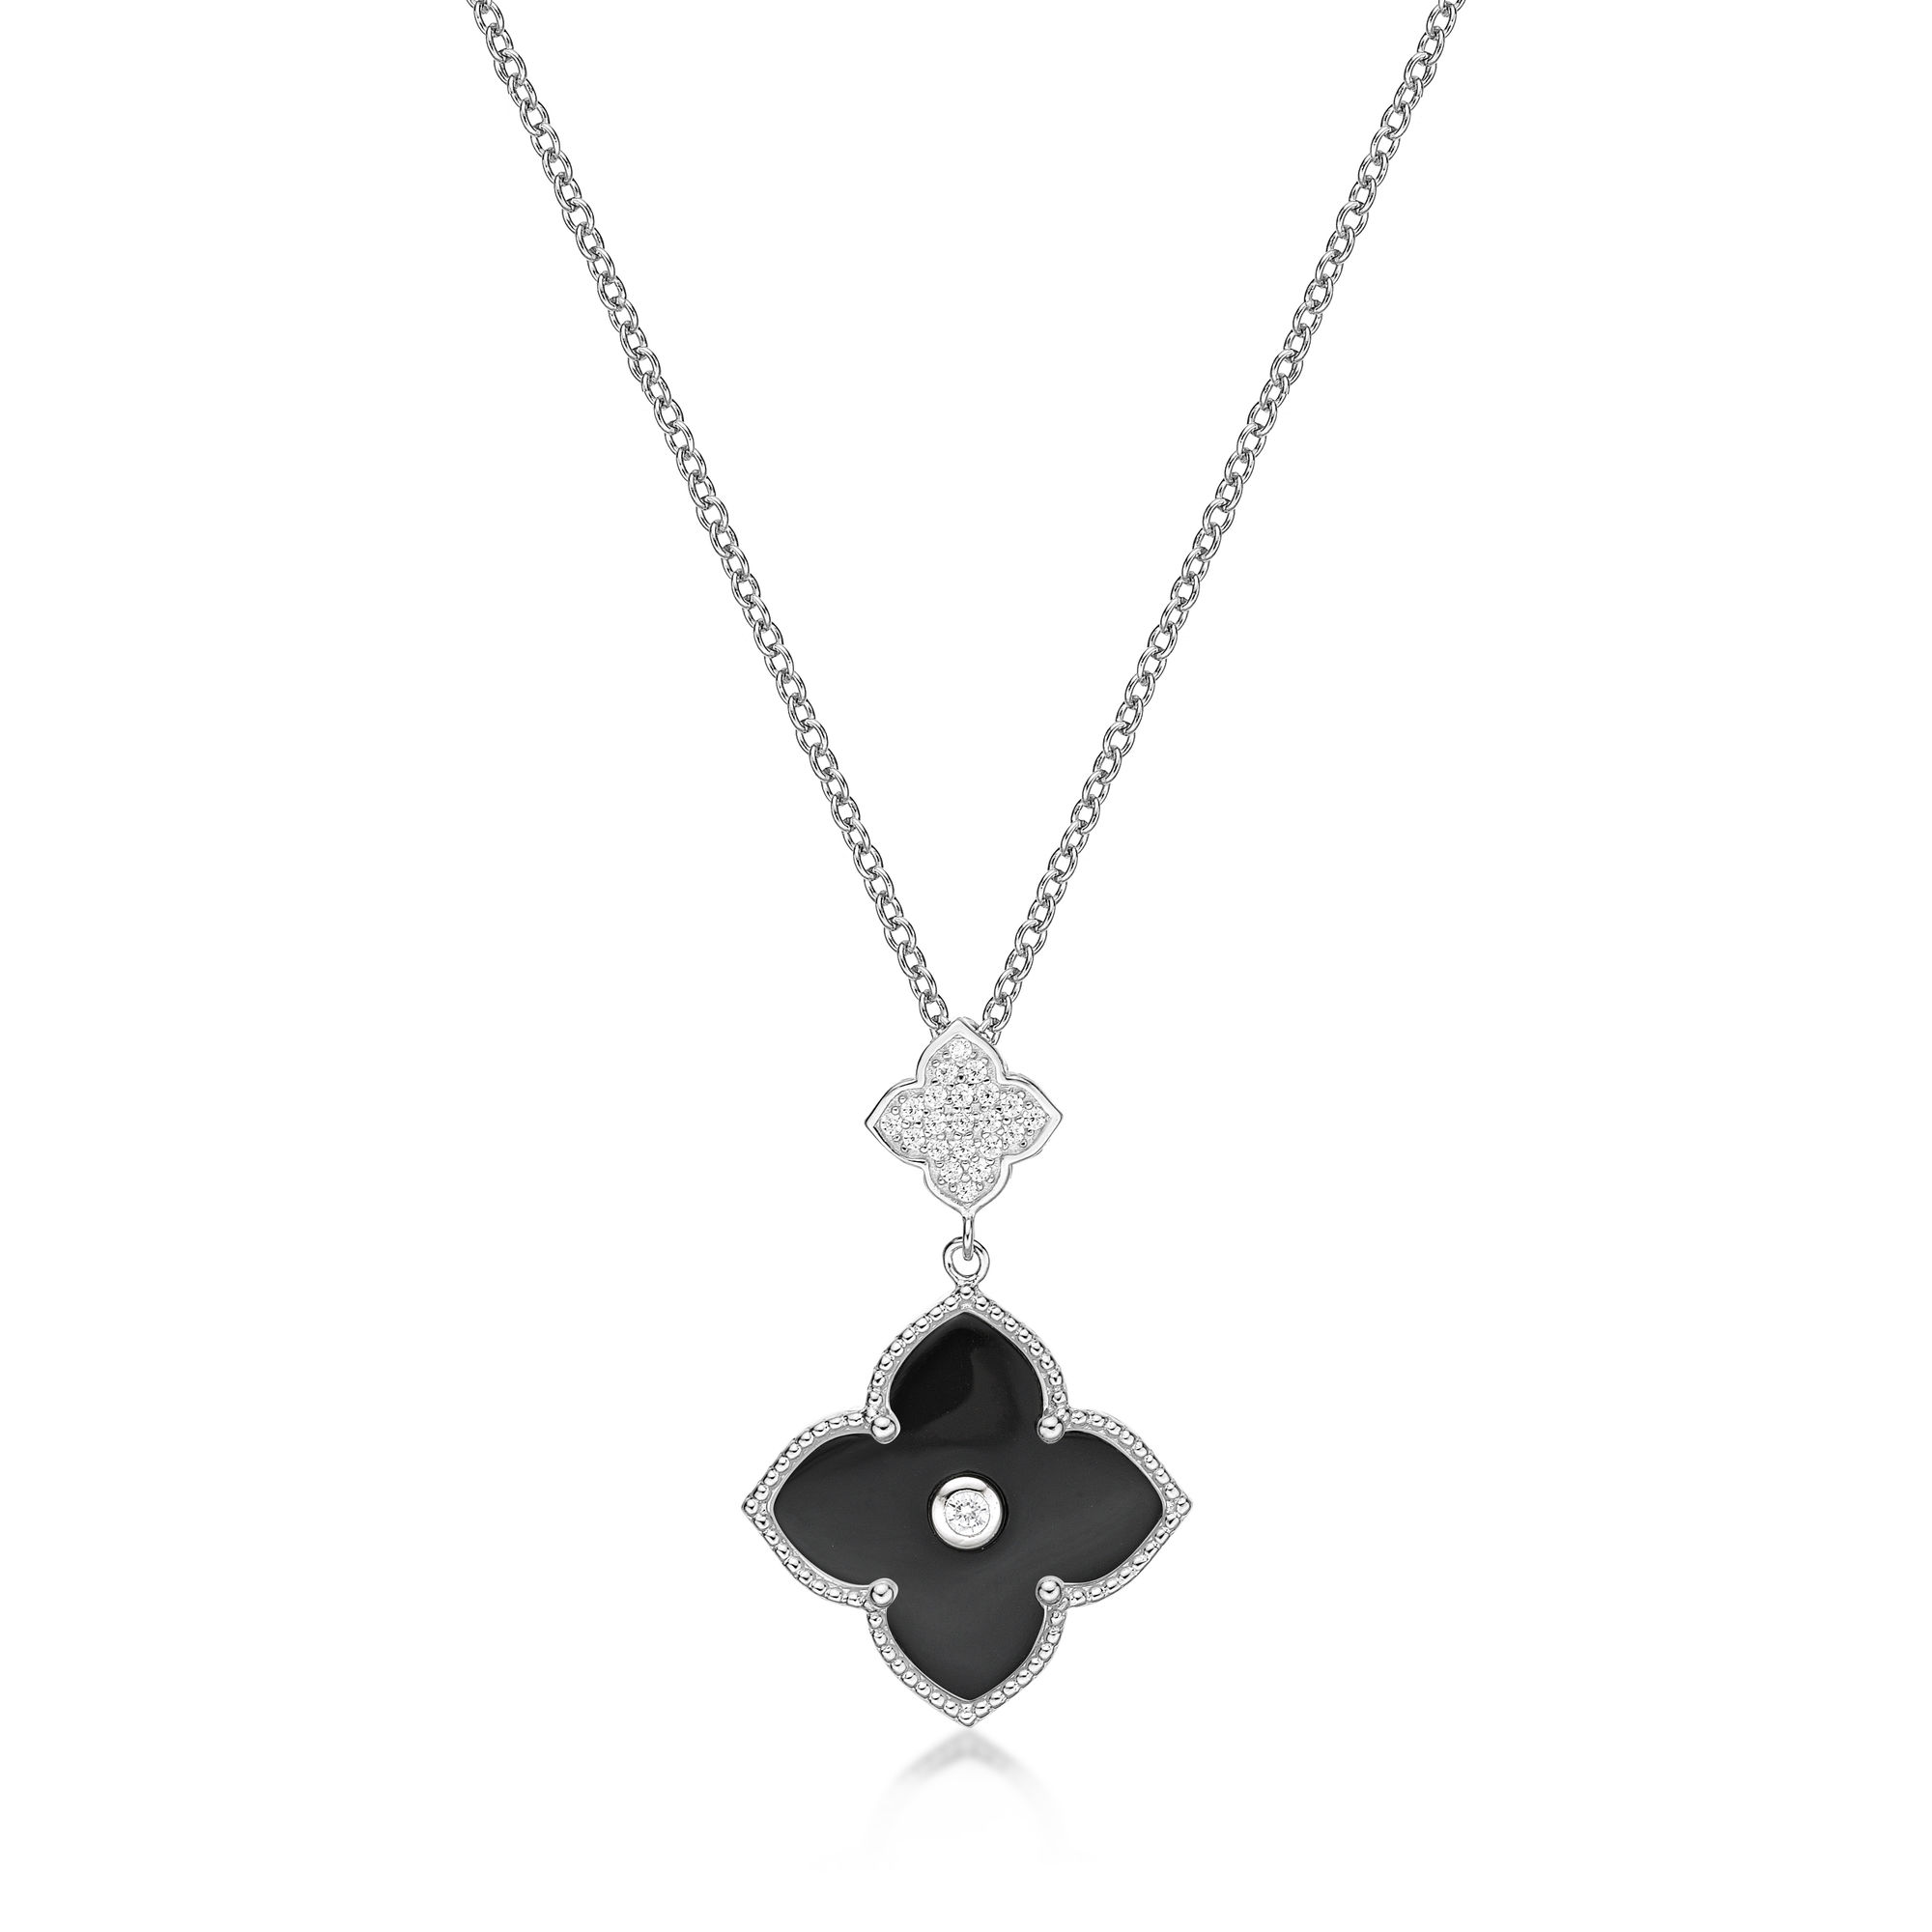 48641-necklace-c-z-silver-2-1.jpg